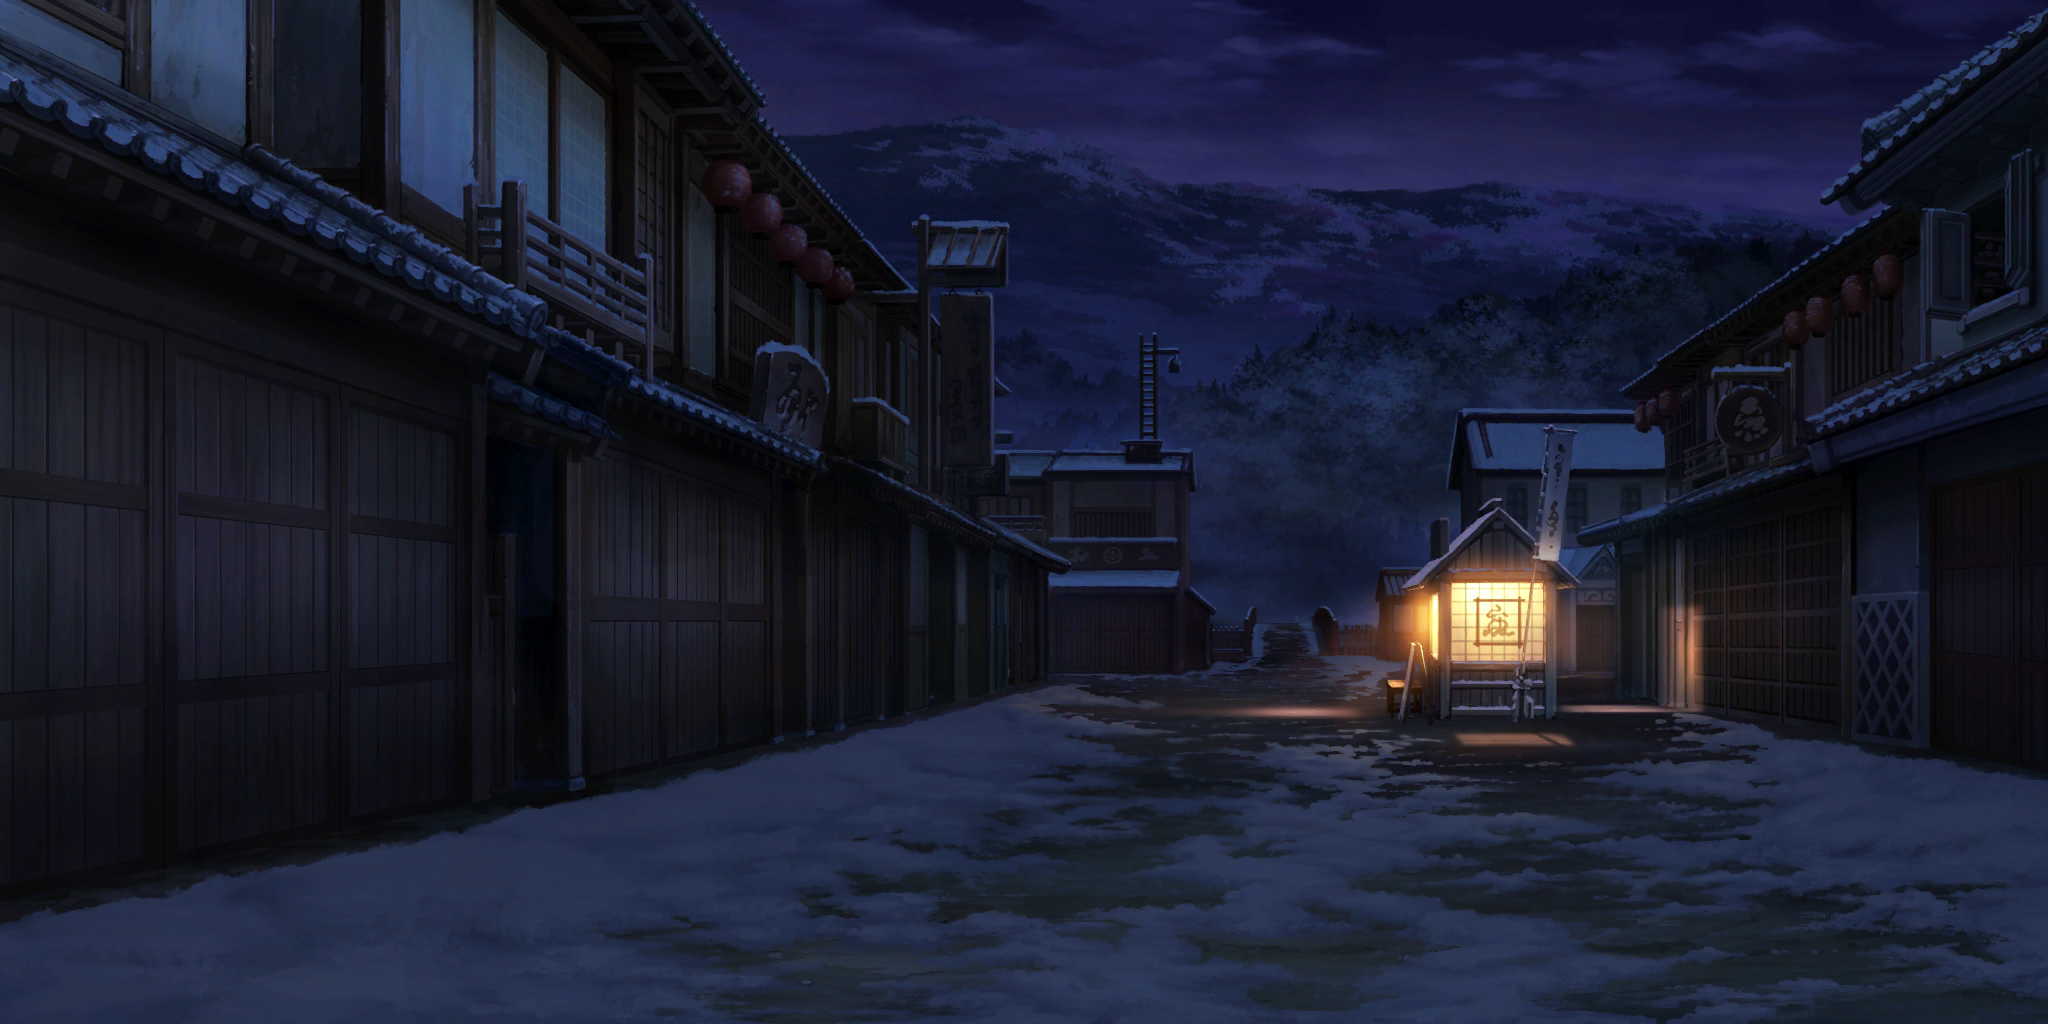 Touhou LostWord - Human Village (Night, Snow)